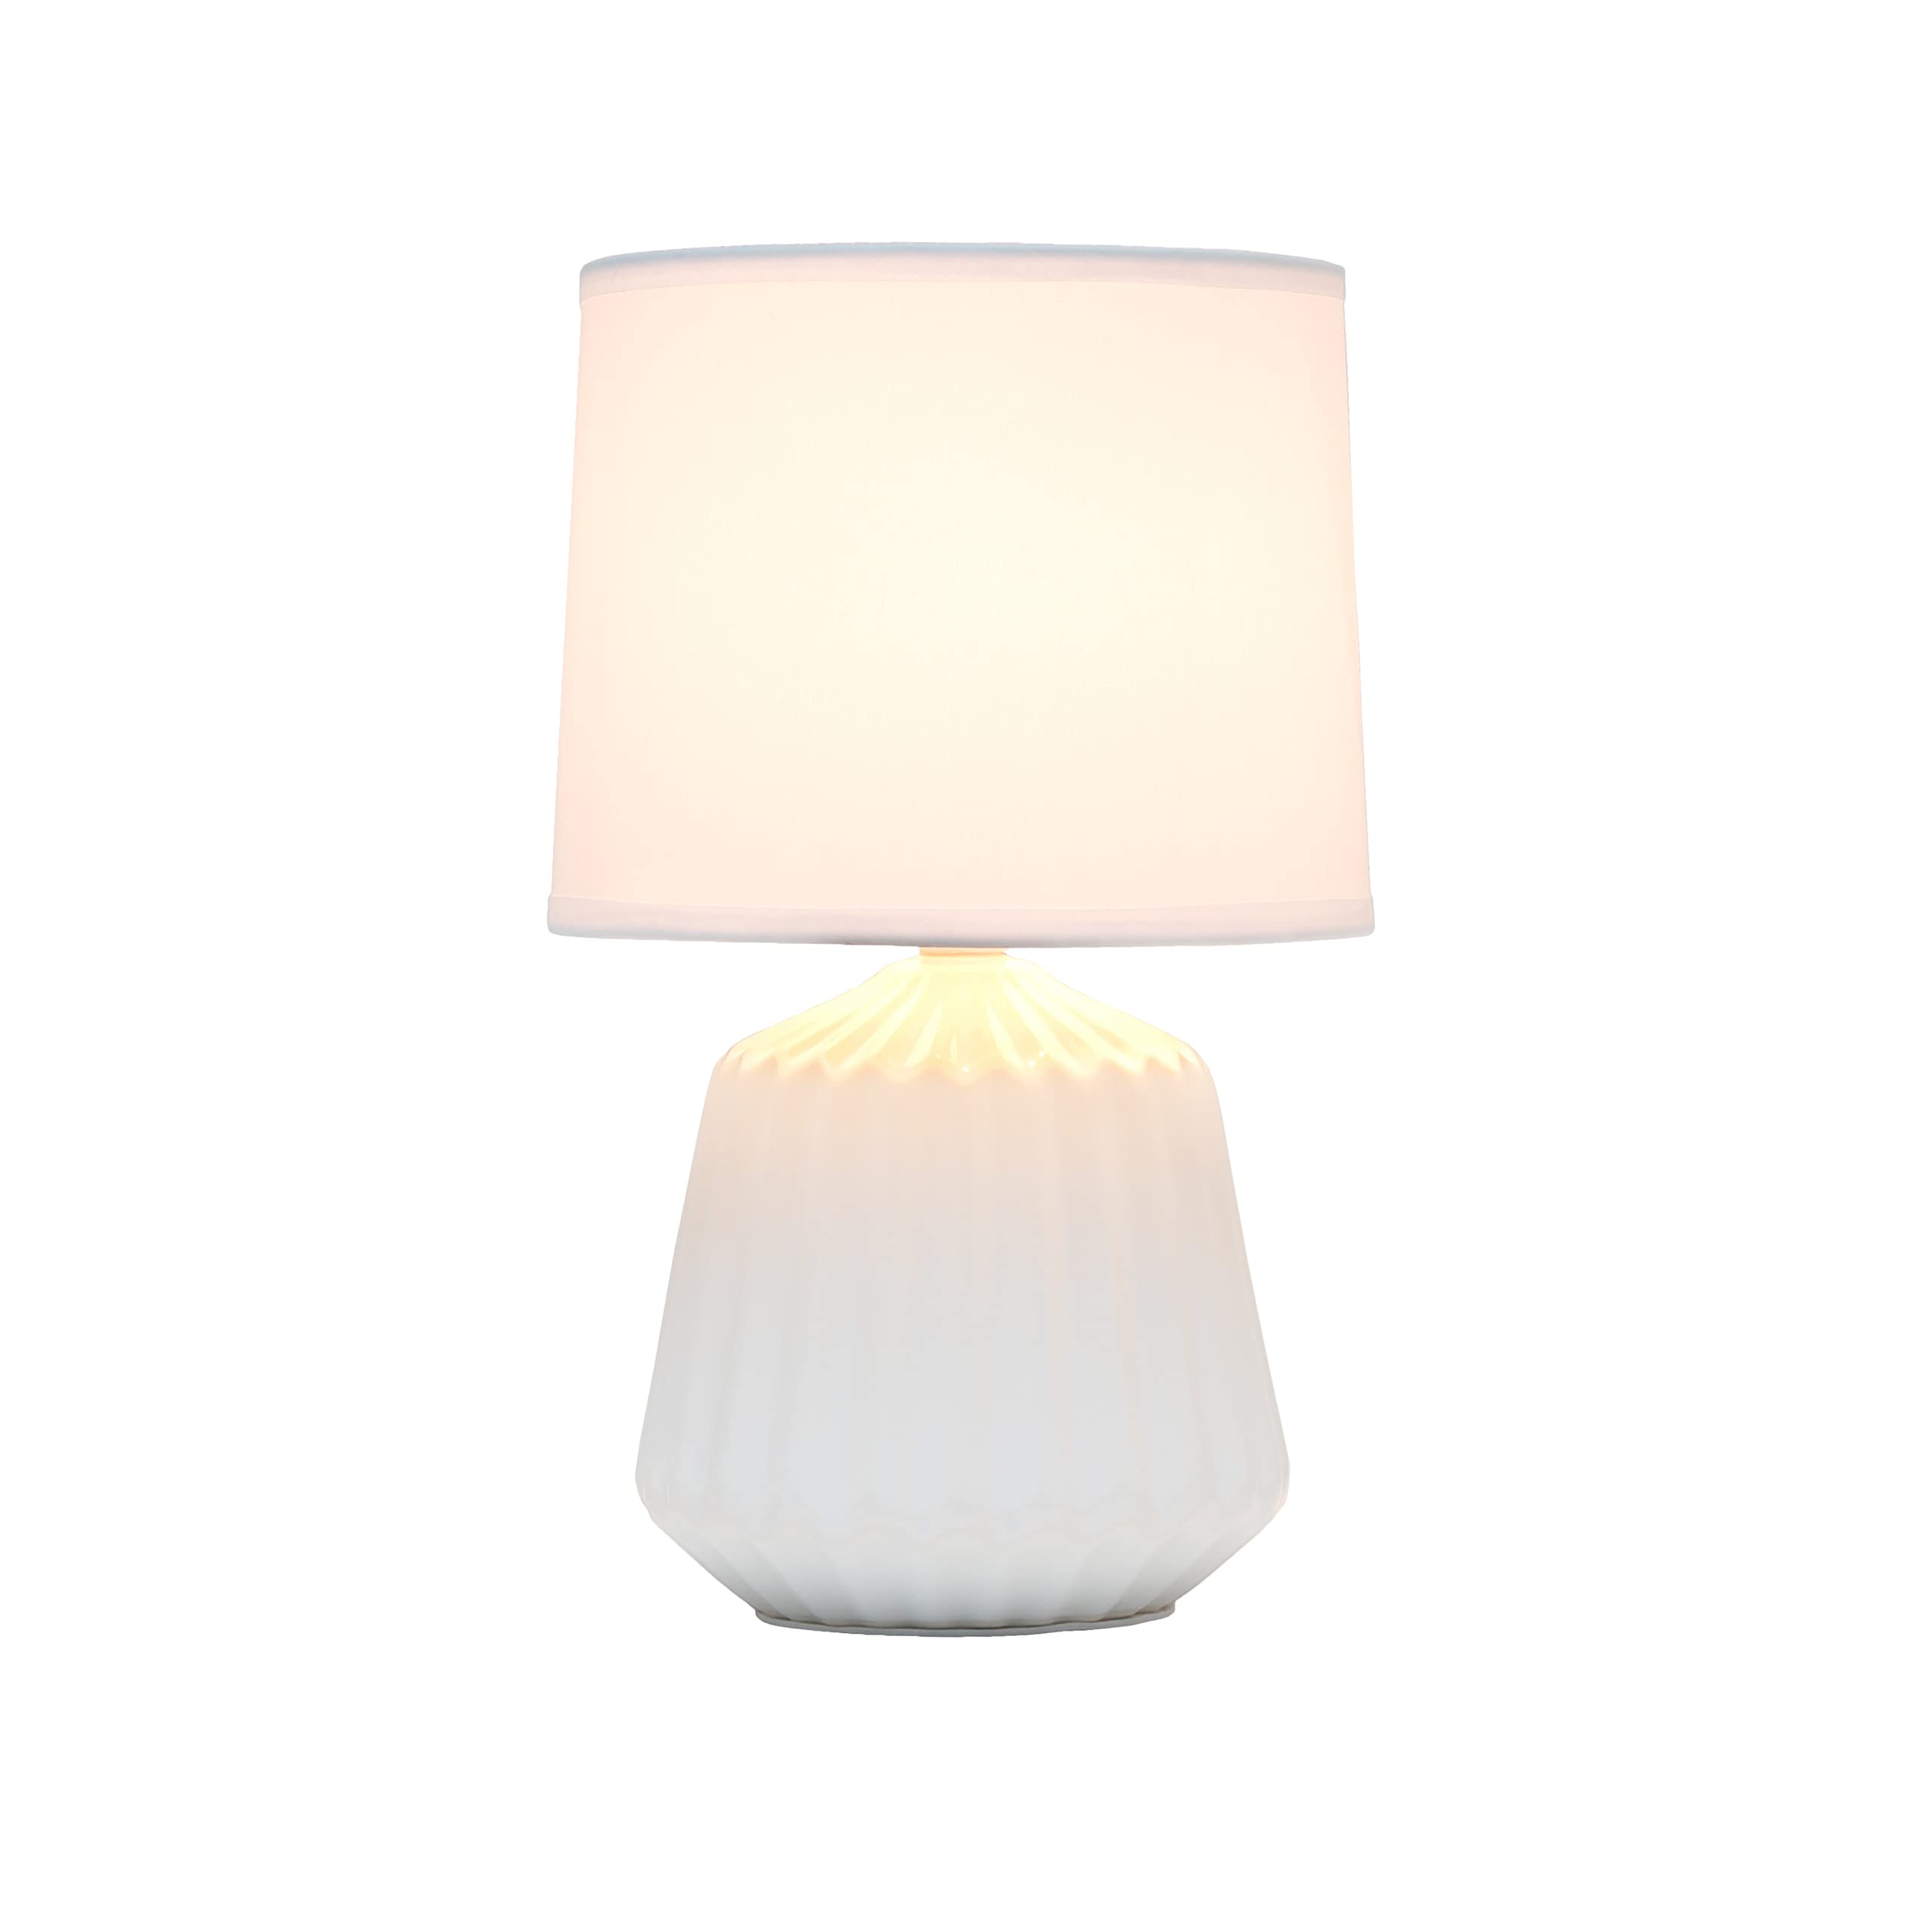 Simple Designs LT1120-OFF Petite Mini Pleated English Ceramic Base Table Lamp, Off White